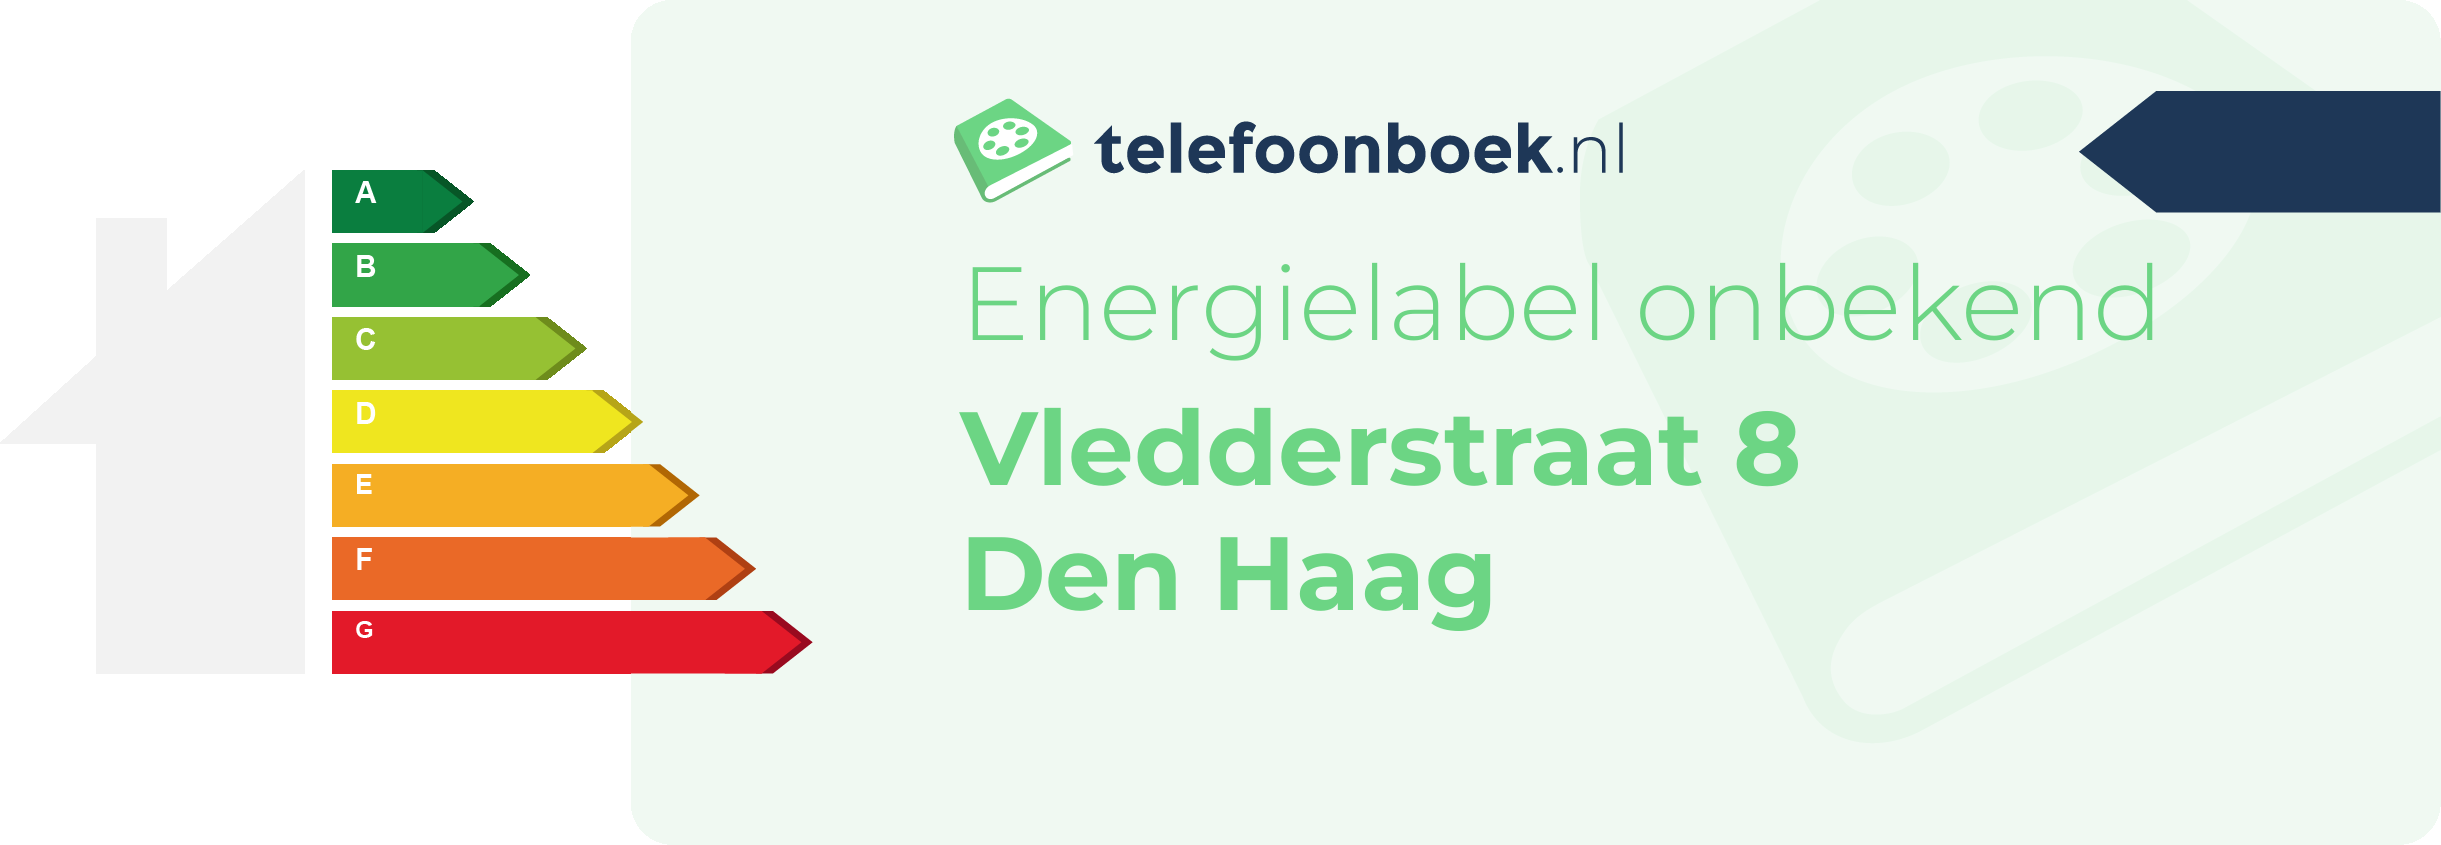 Energielabel Vledderstraat 8 Den Haag